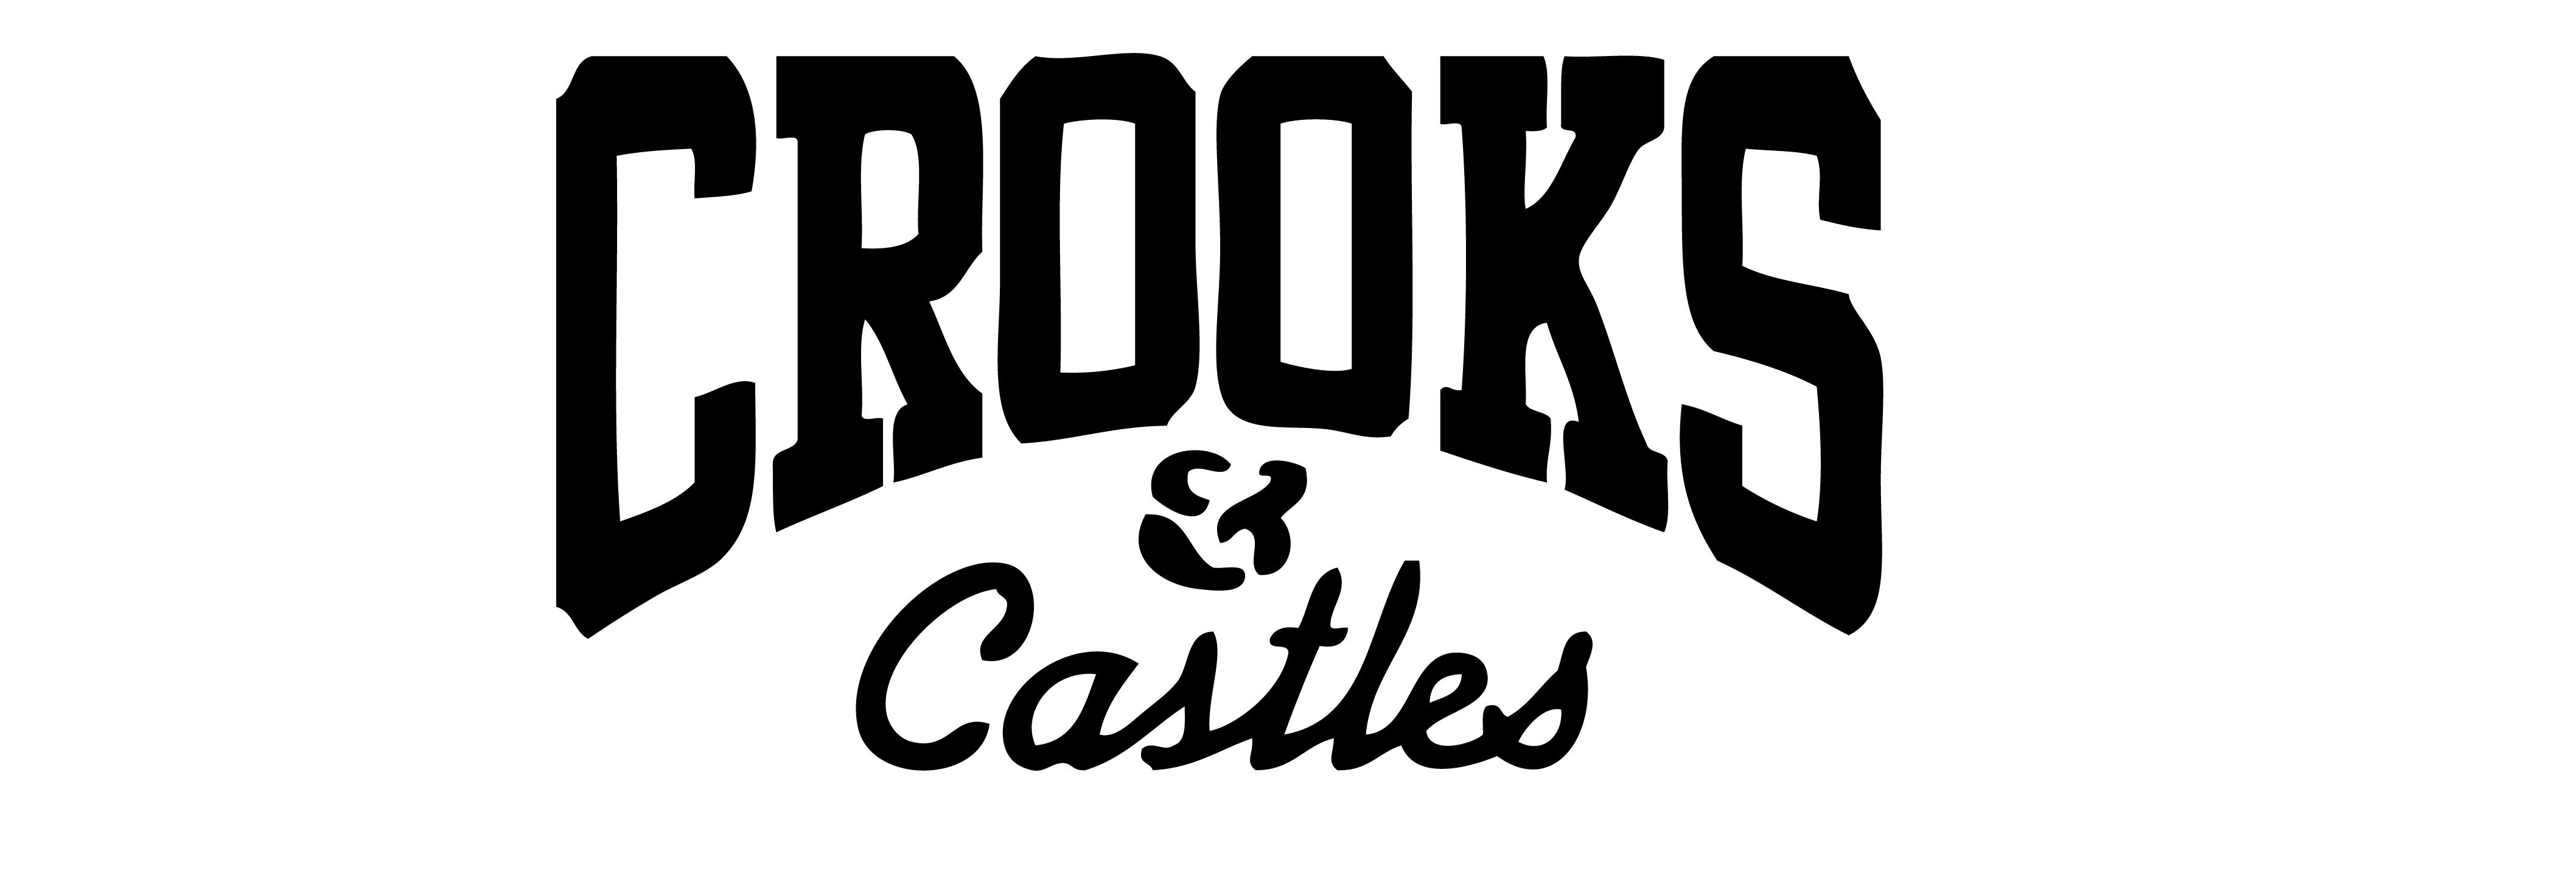 A L Crooks and Castles Logo - CROOKS-CASTLES-LOGO-psd50234 (2) - Direct Liquidation | Vancouver ...